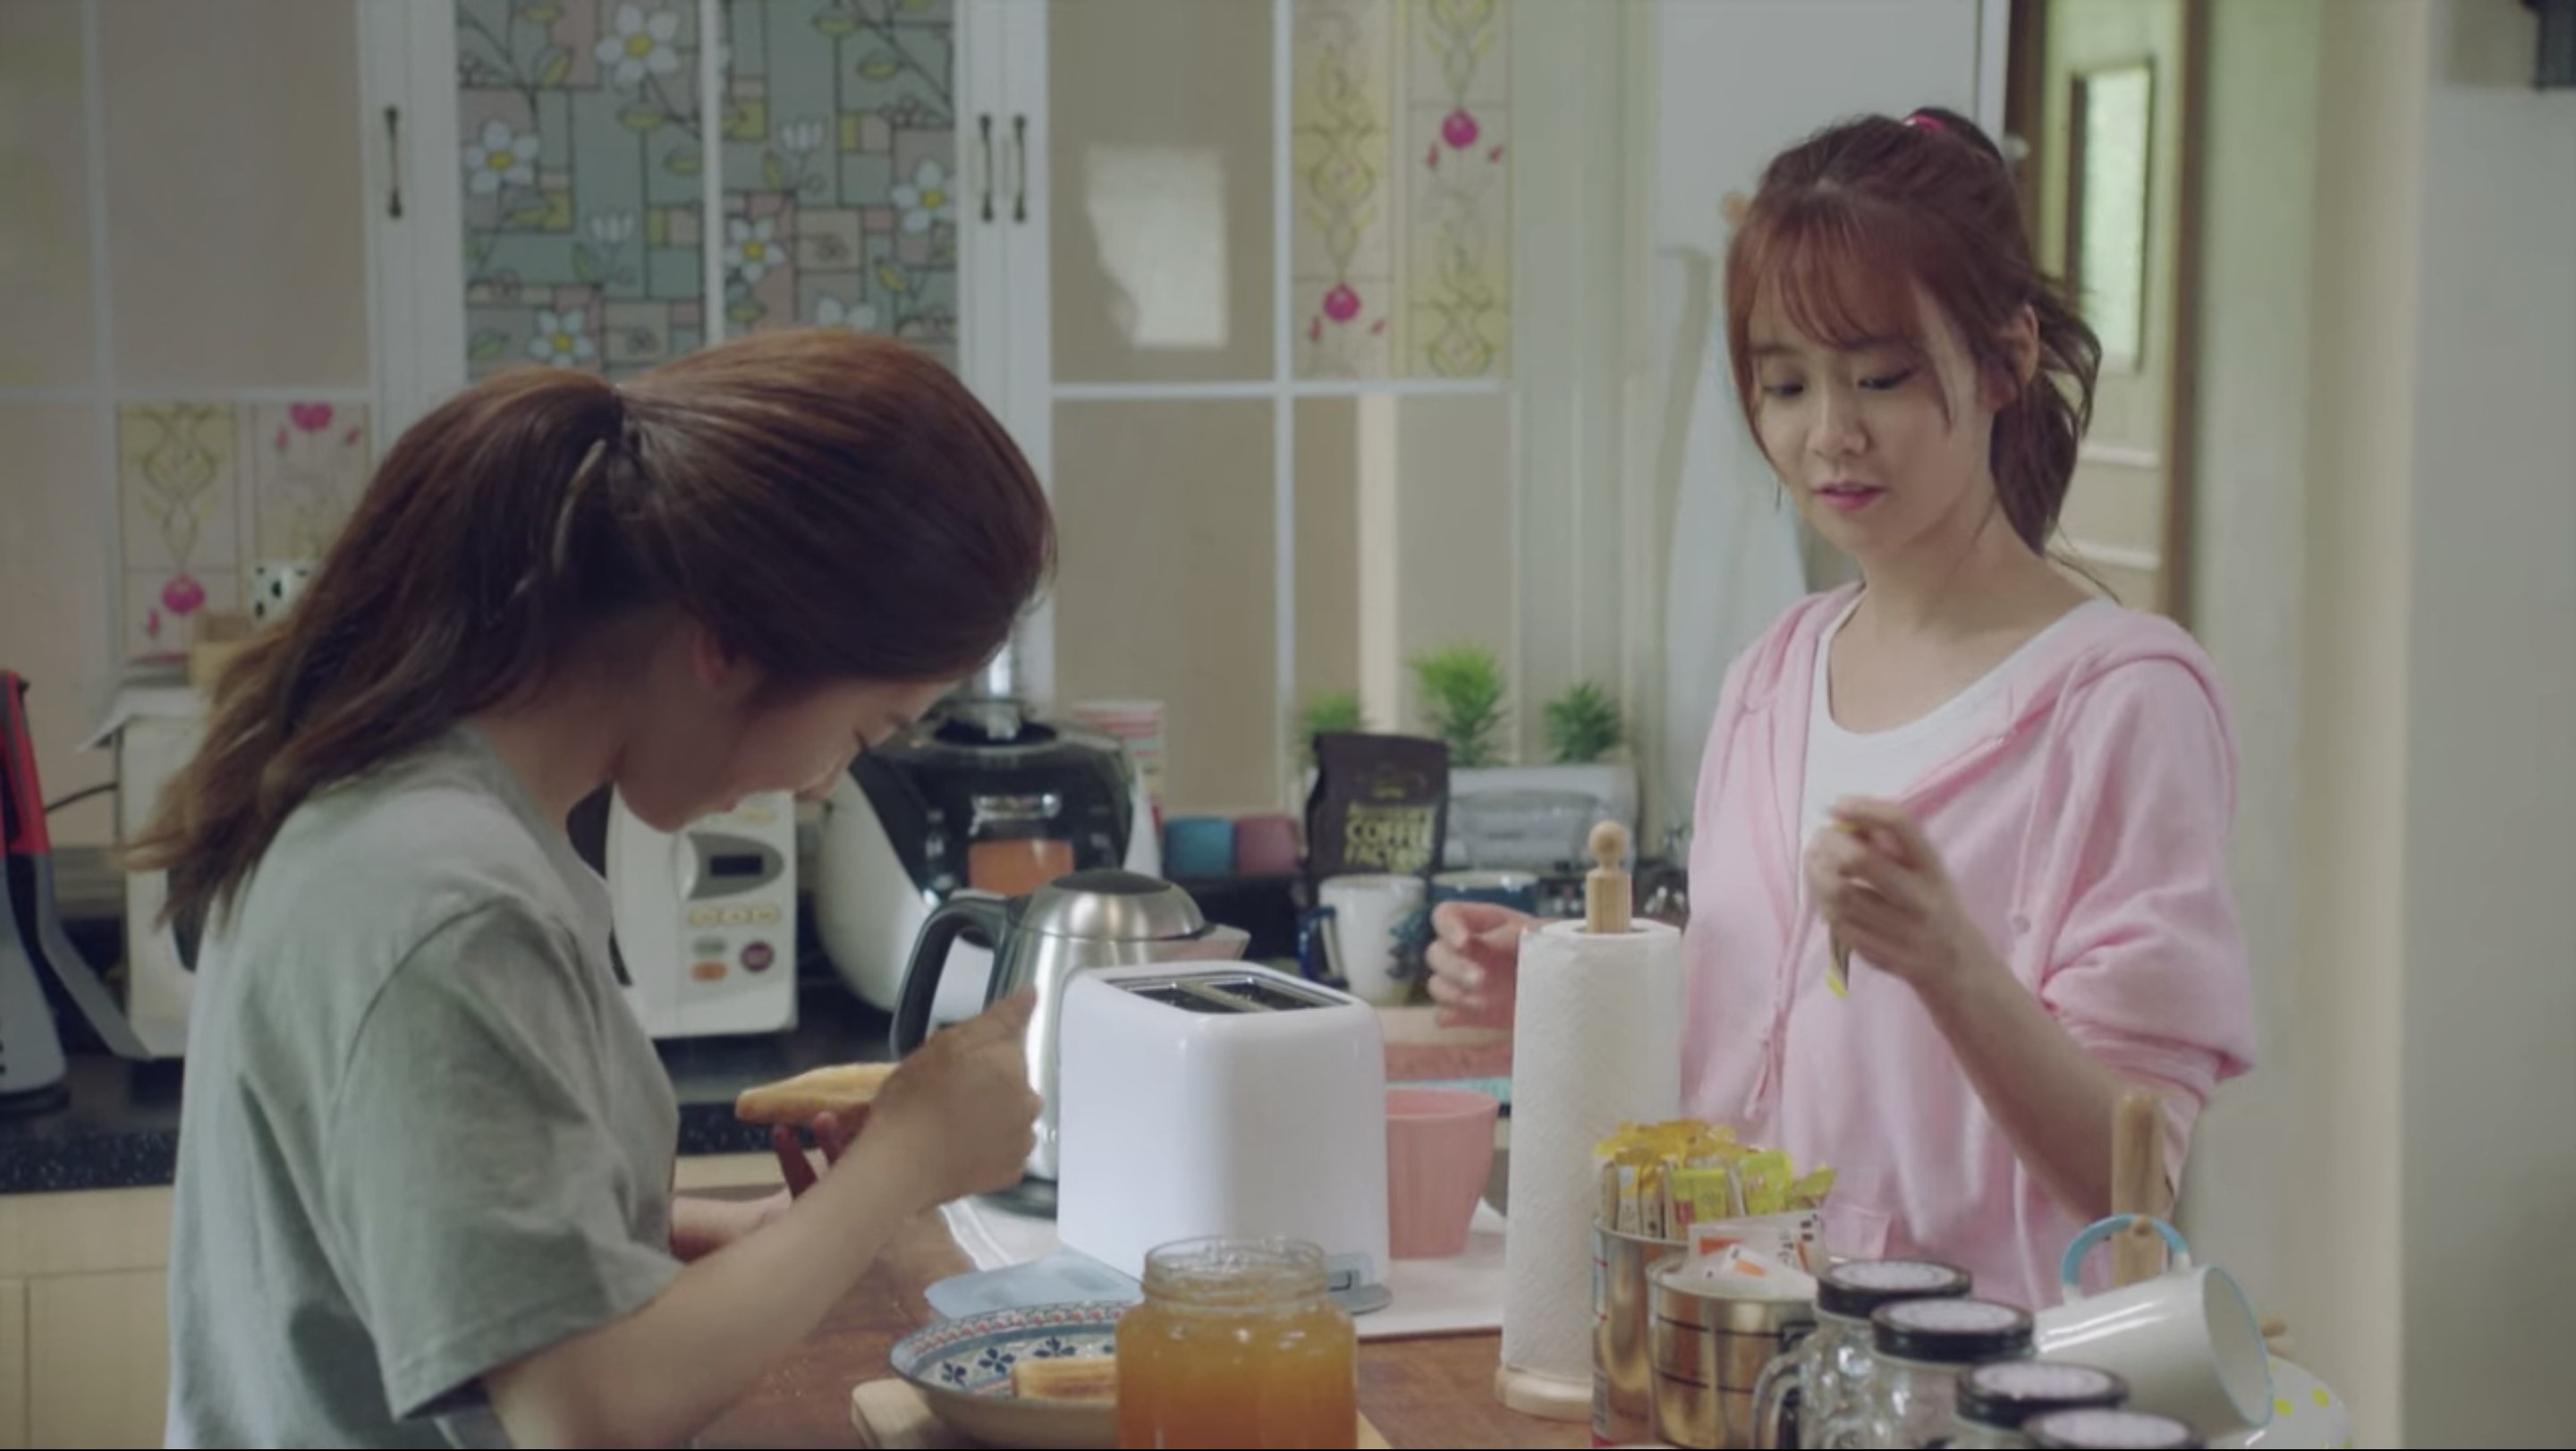 Two Korean women stand in a kitchen making breakfast.